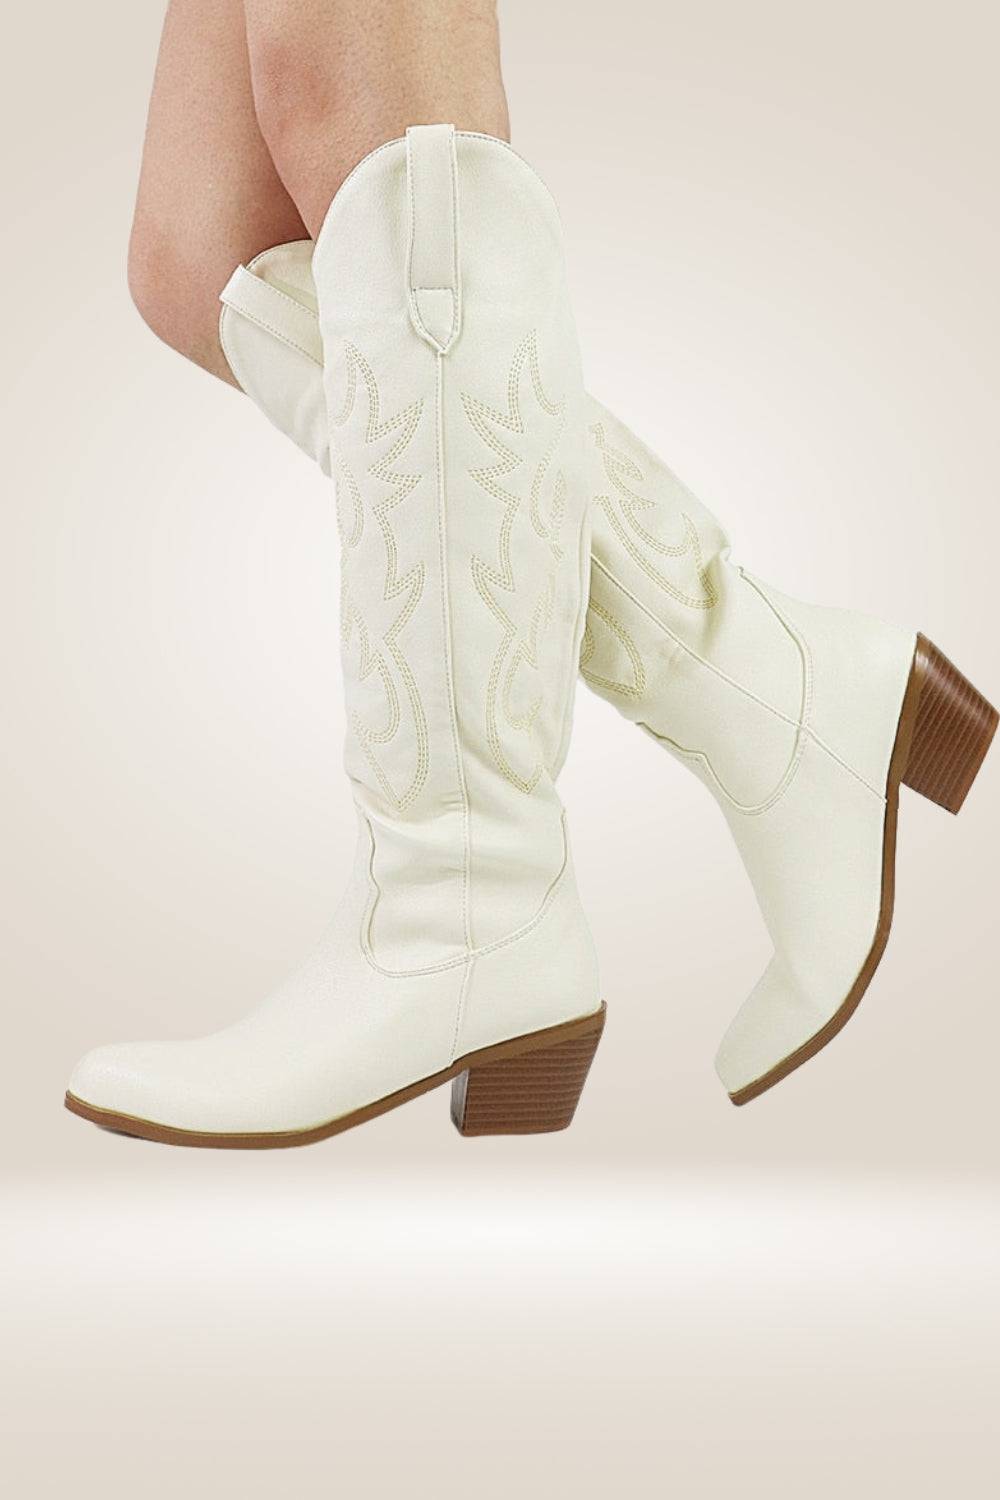 Knee High Cowboy Boots In Beige - TGC Boutique - Cowboy Boots